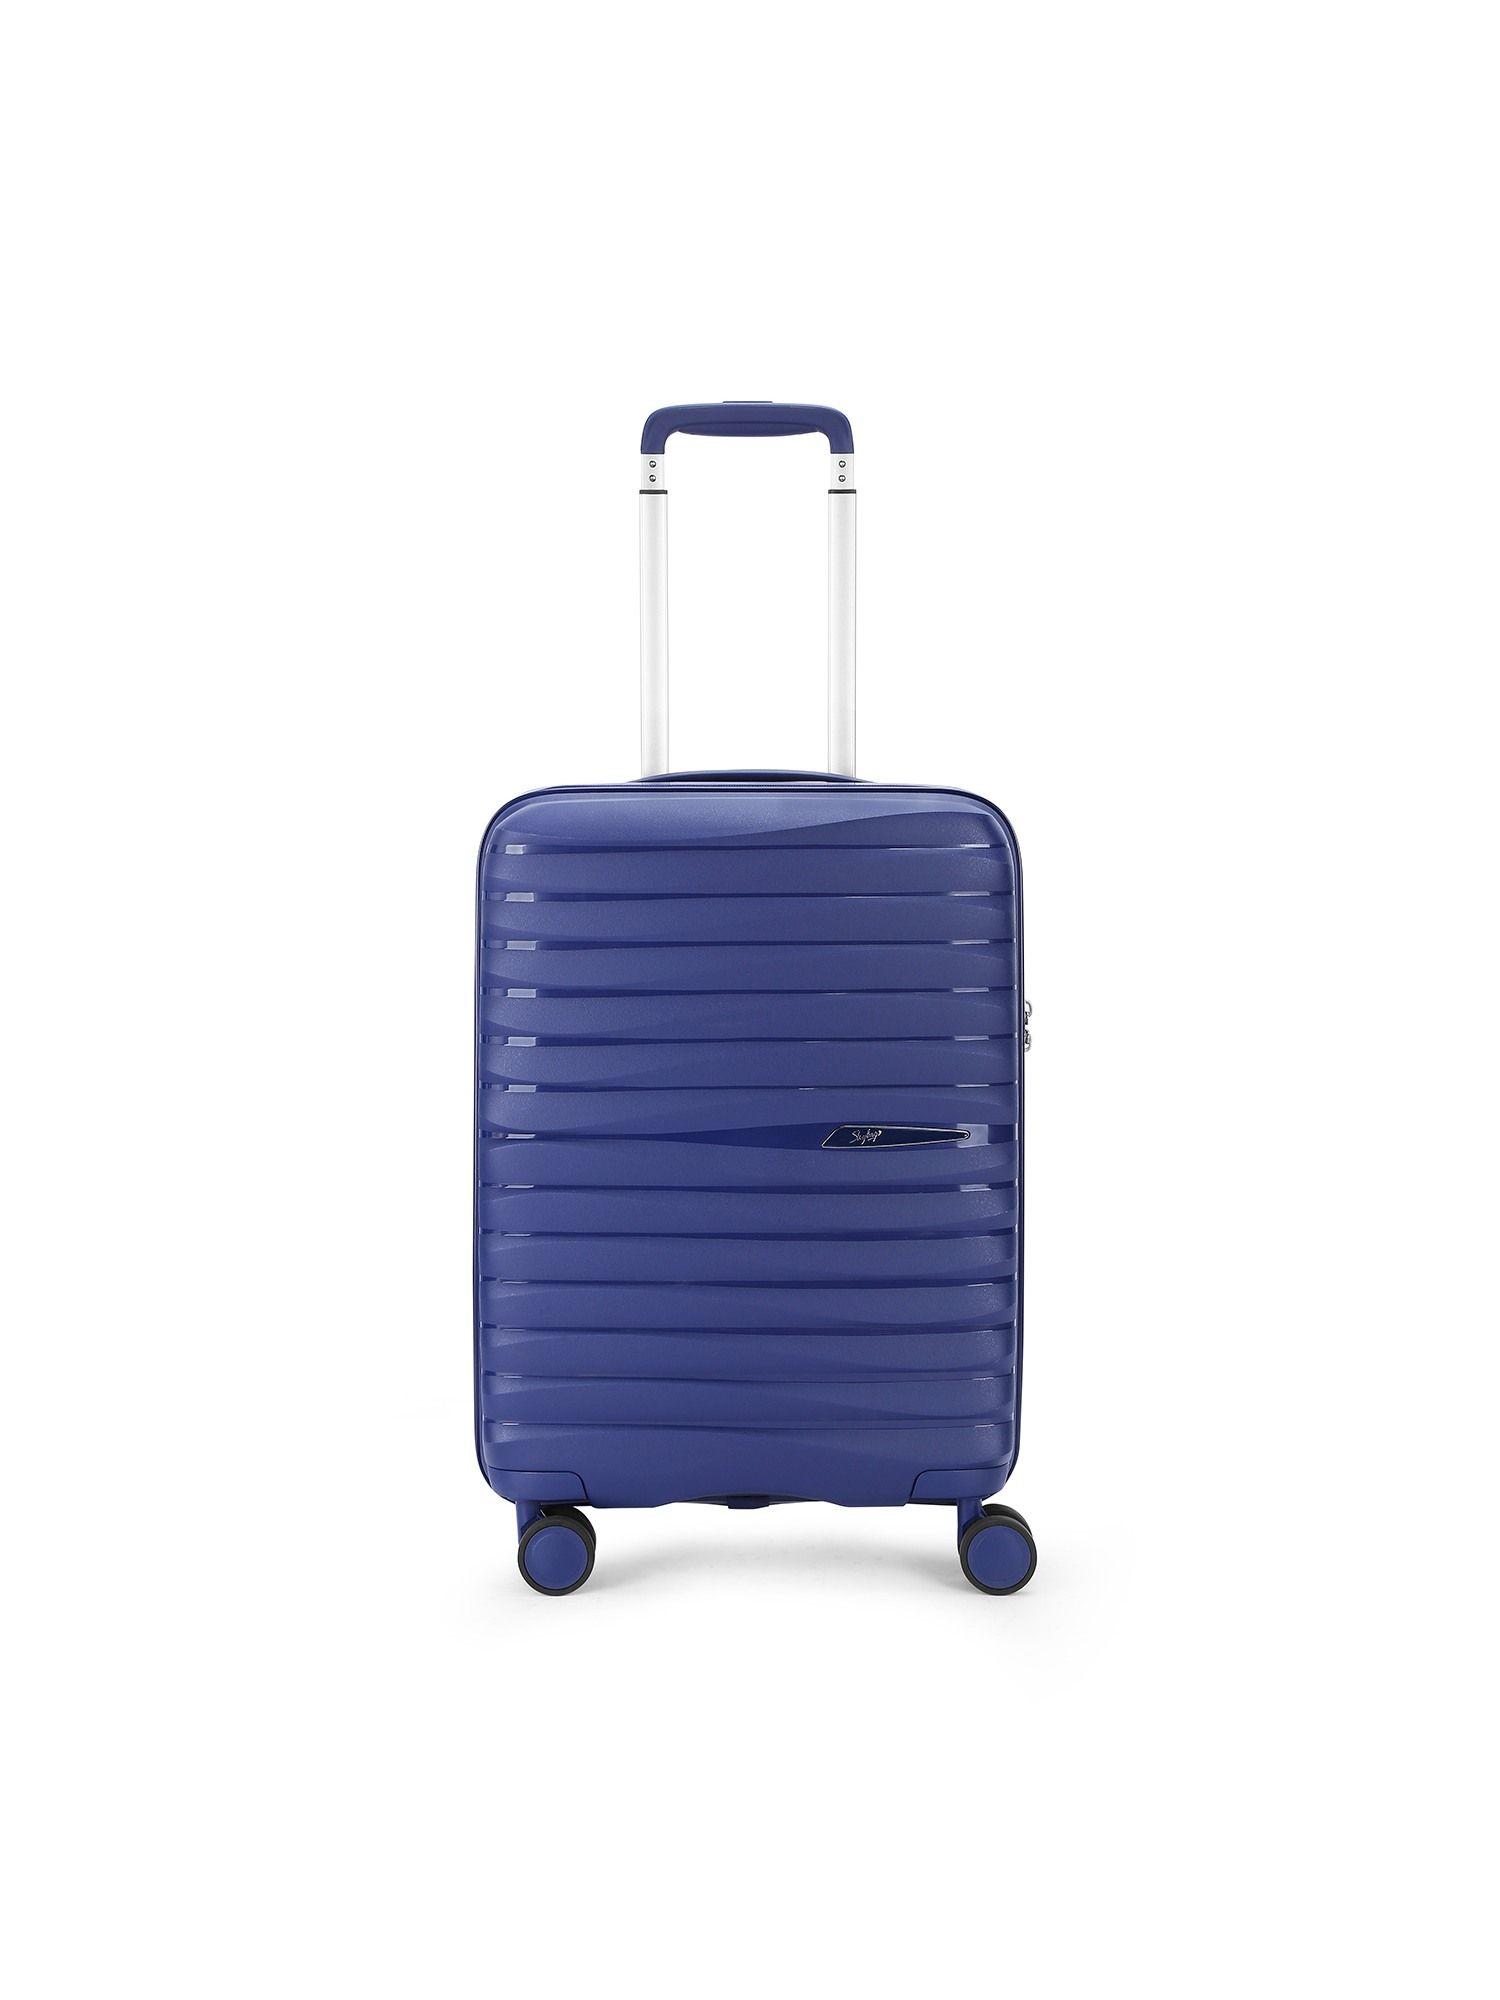 flot blue hard luggage 8-wheel suitcase cabin trolley bags